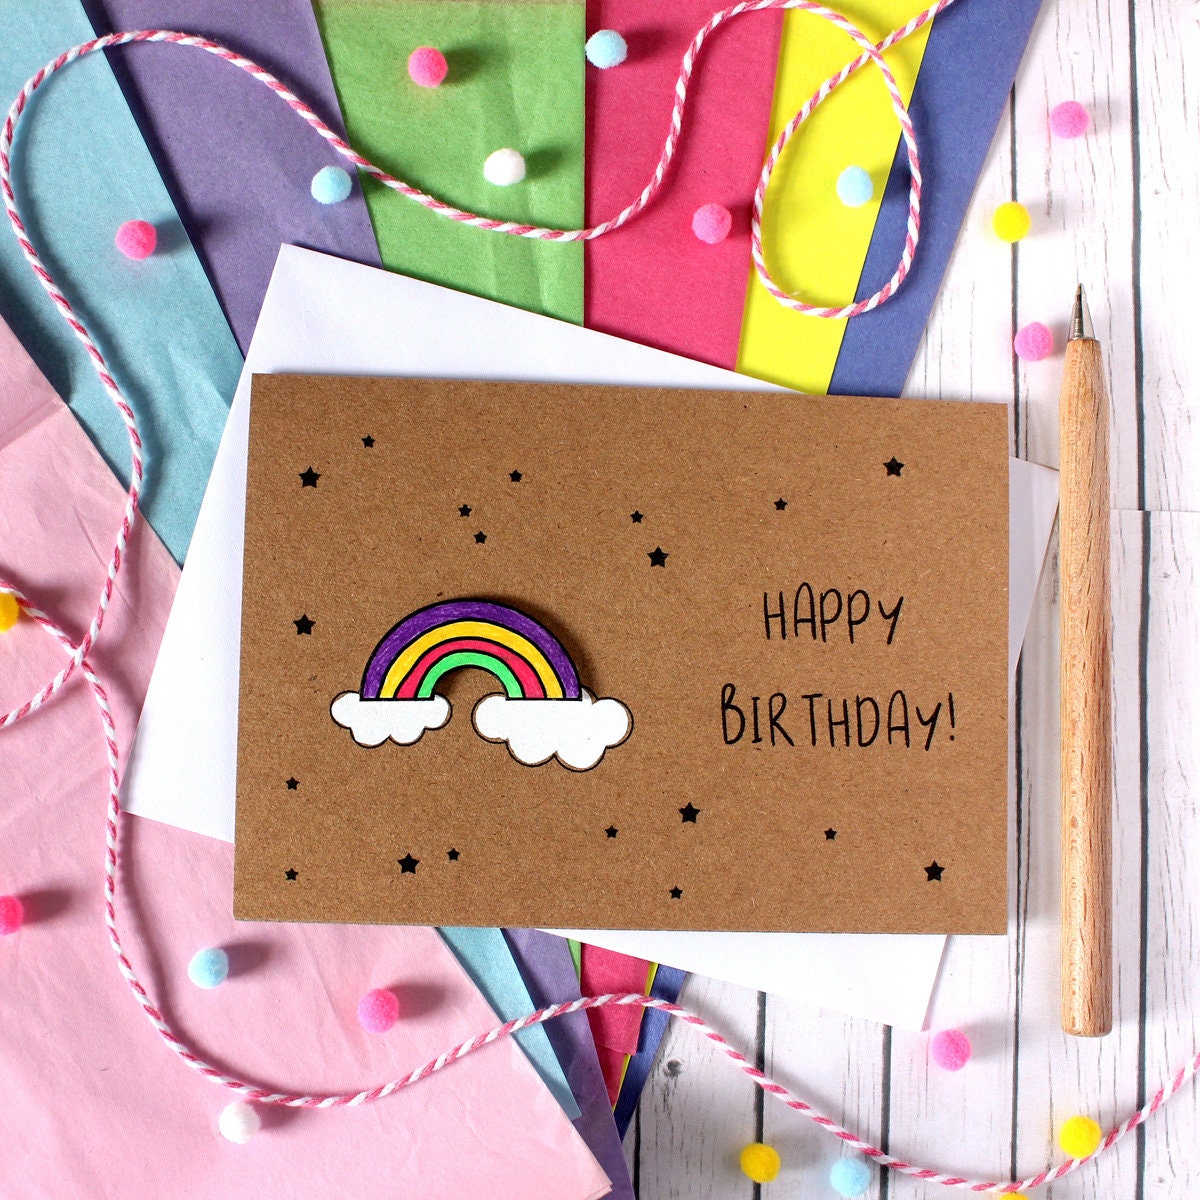 I Love Doing All Things Crafty: Happy Birthday Rainbow Streamer Cards